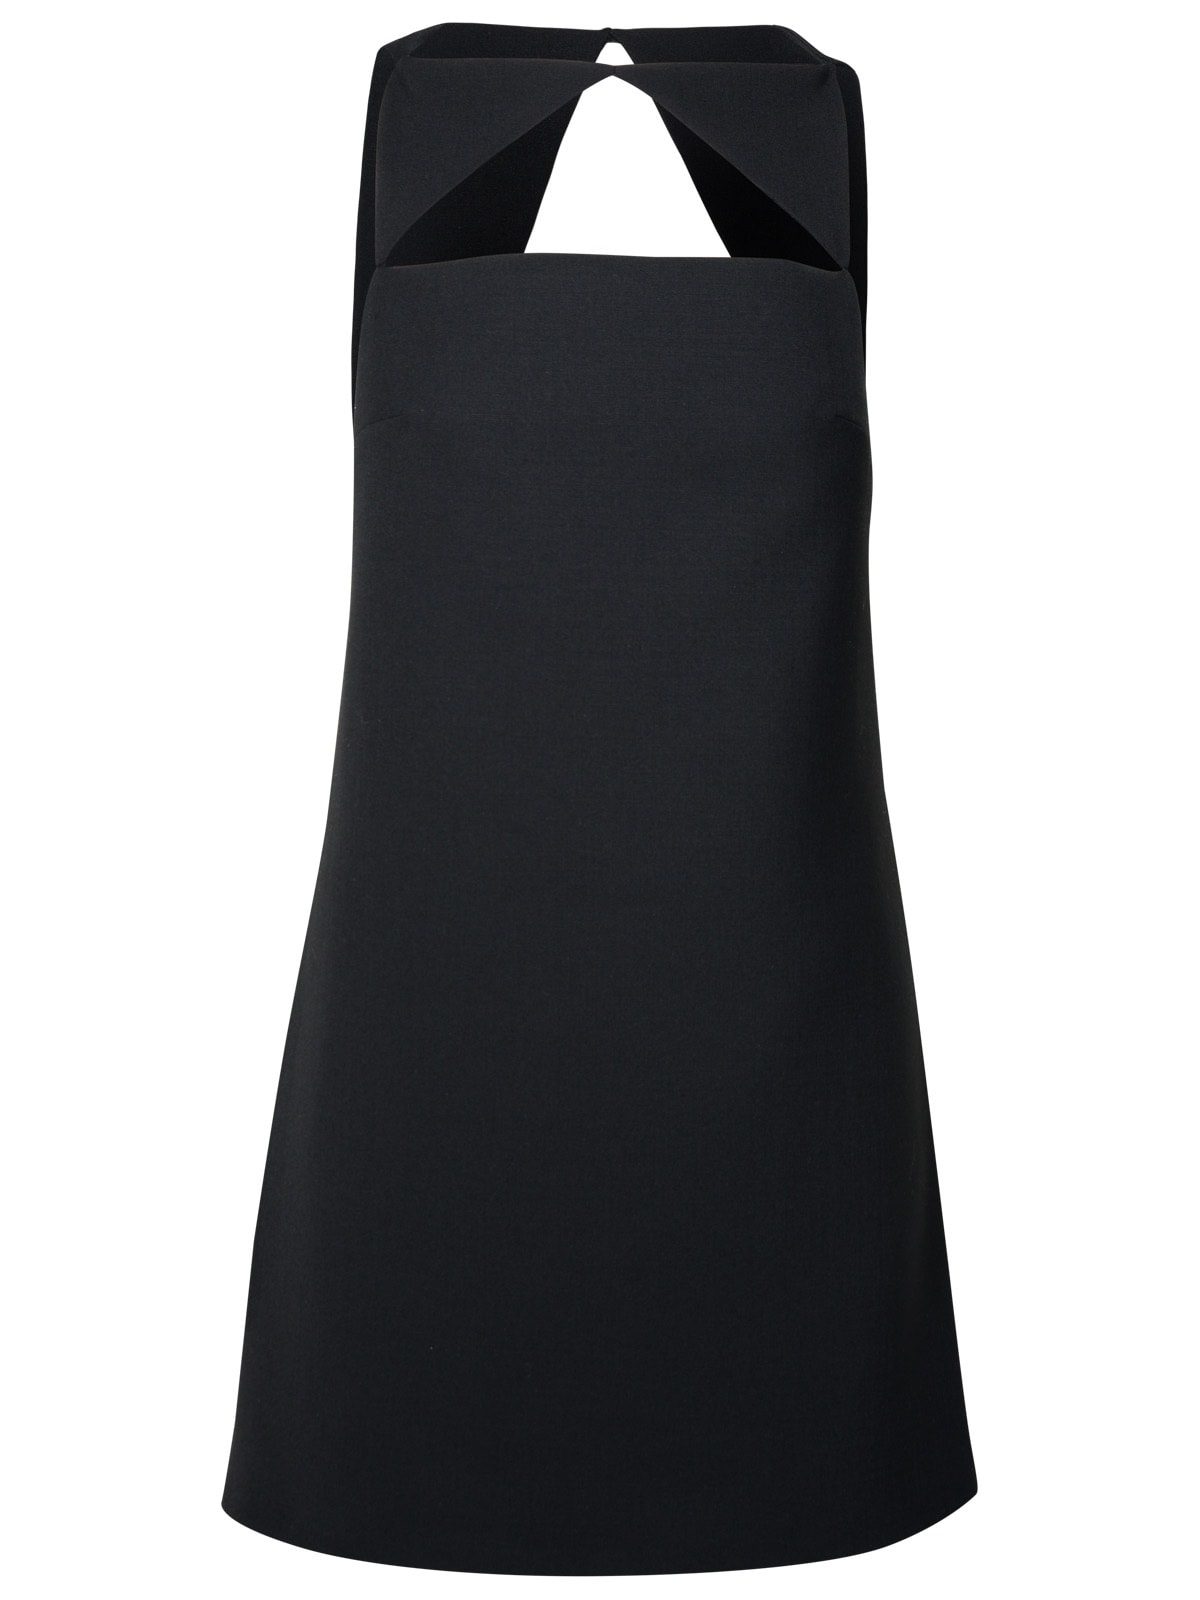 Versace Black Virgin Wool Blend Dress